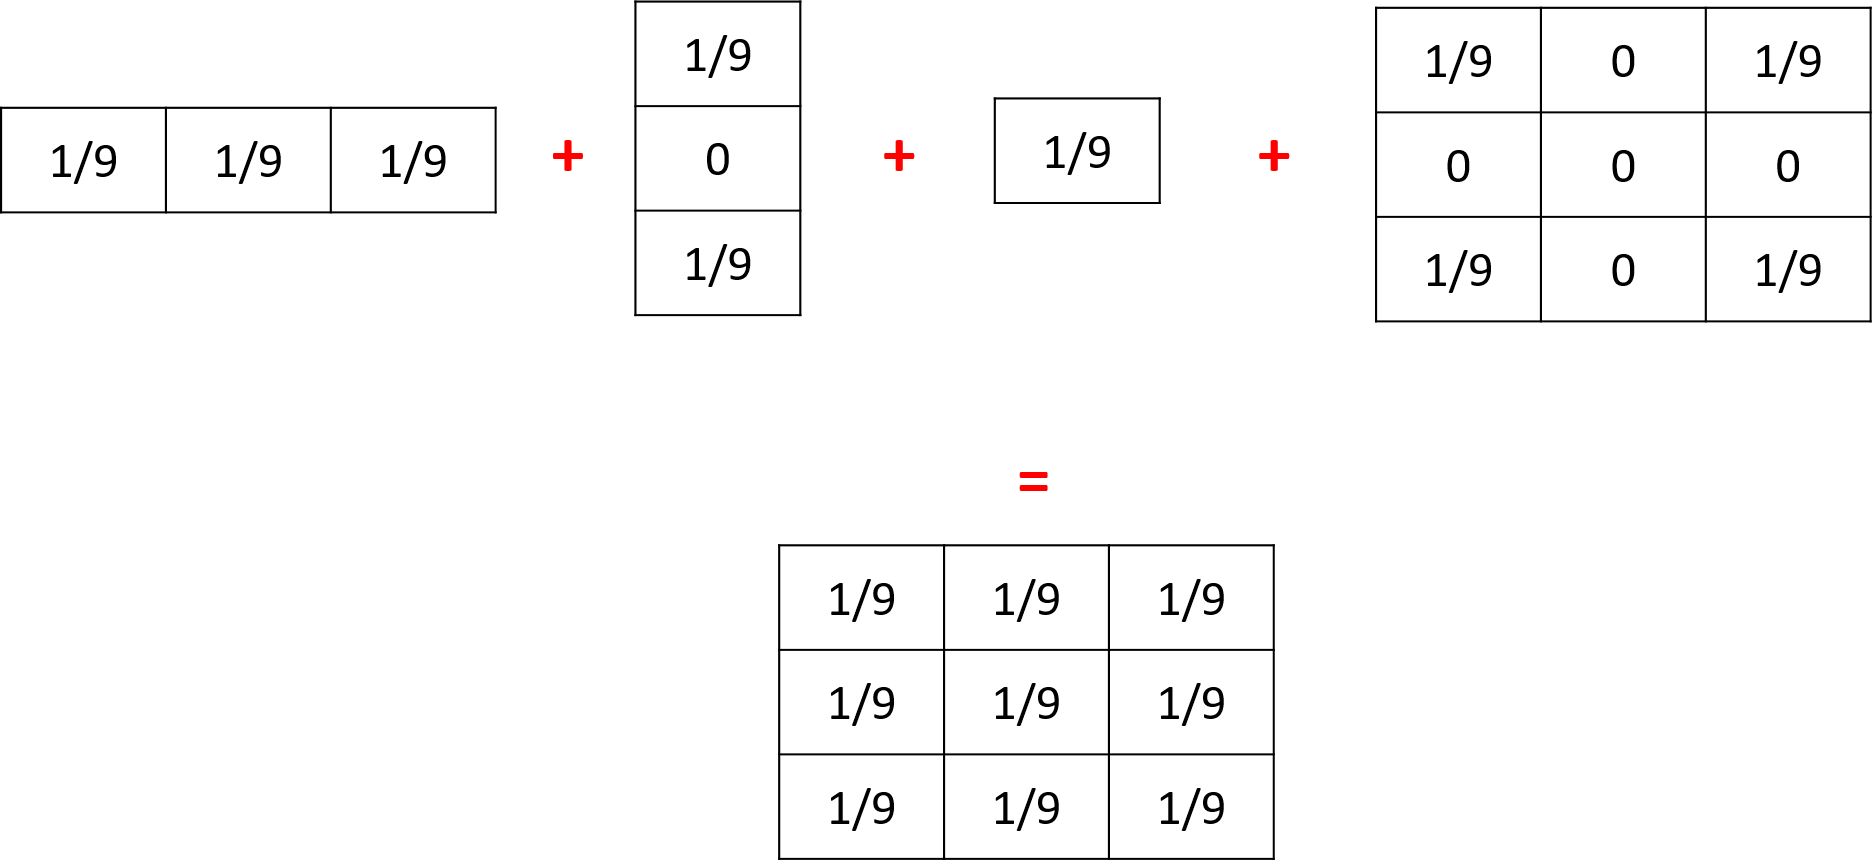 Example of matrix combinations.